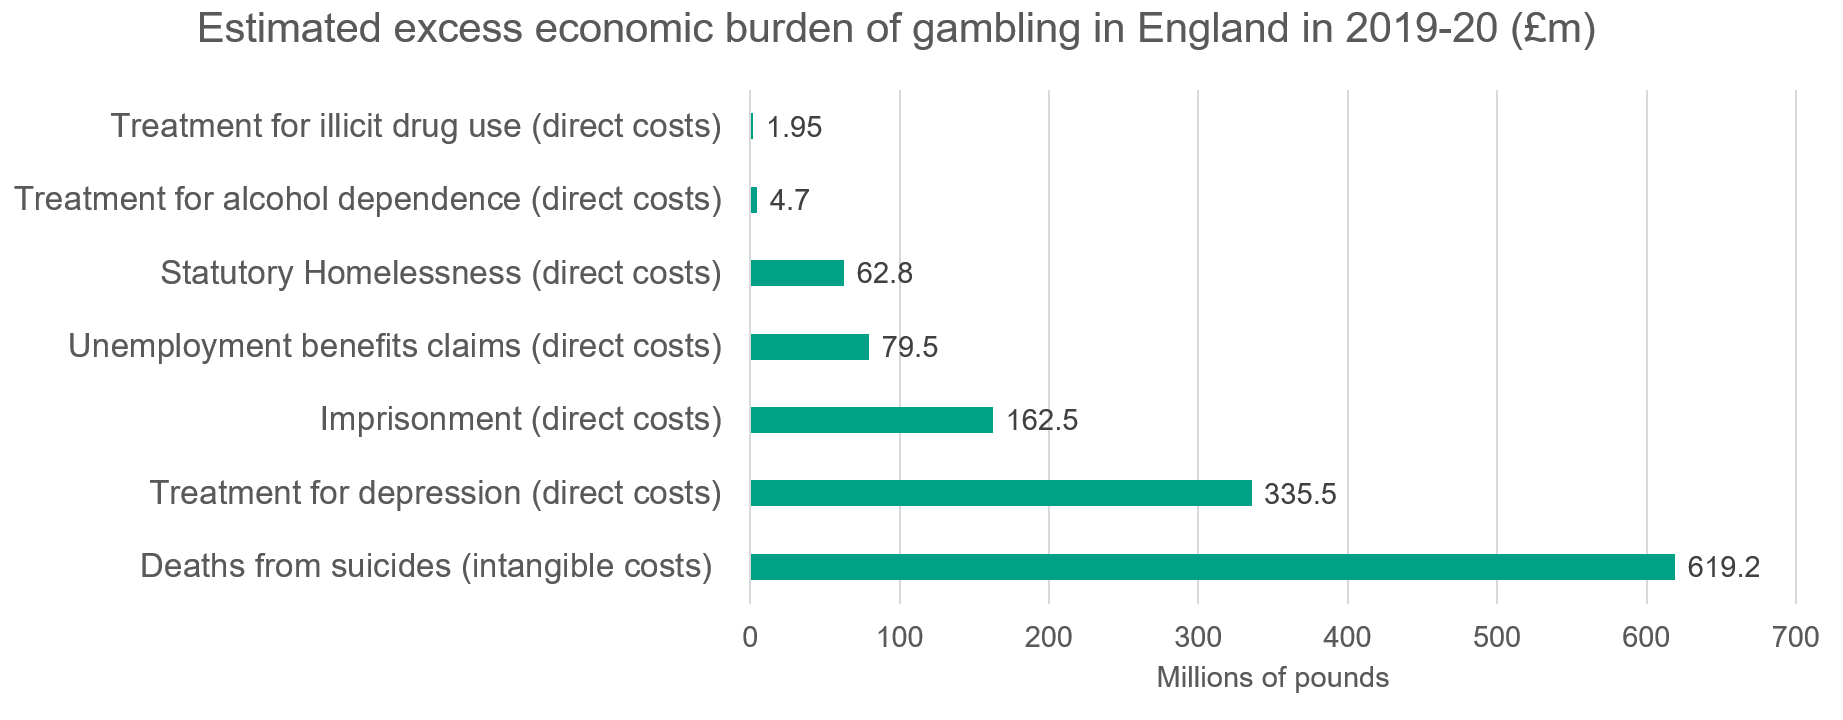 Estimated excess economic burden of gambling in England in 2019-20 (£m)